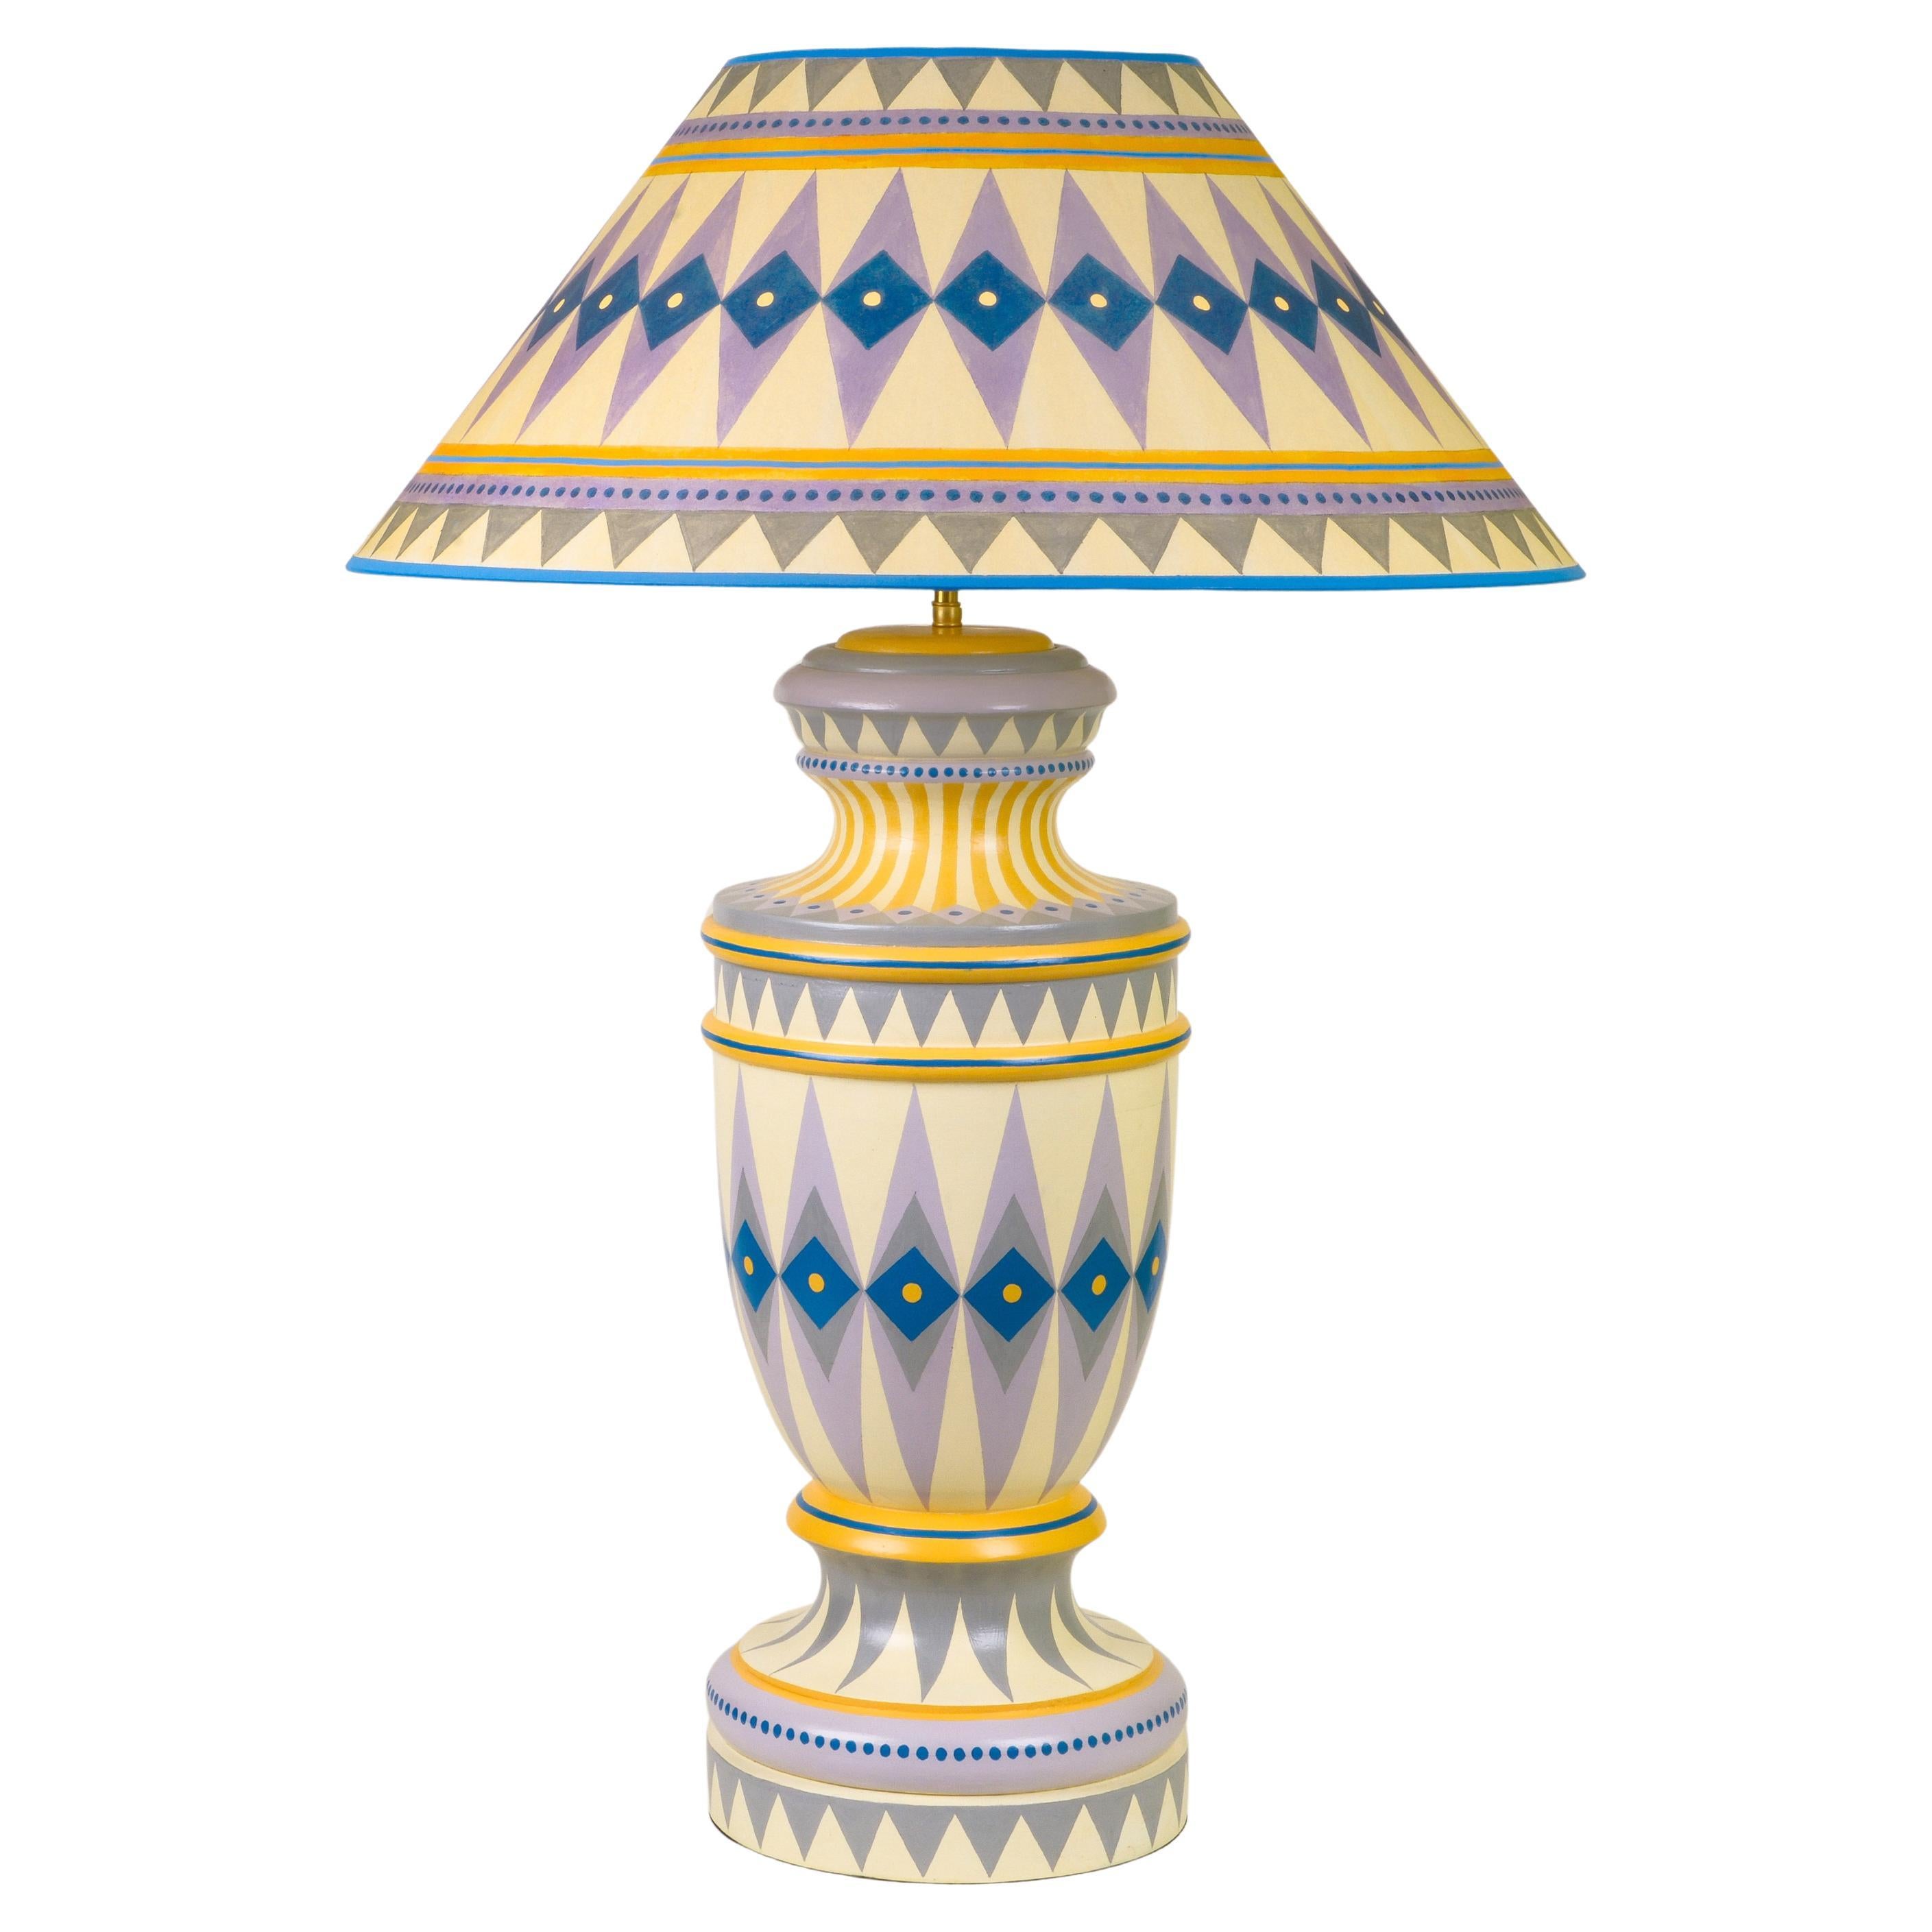 Cressida Bell - 'Harlequin' Table Lamp